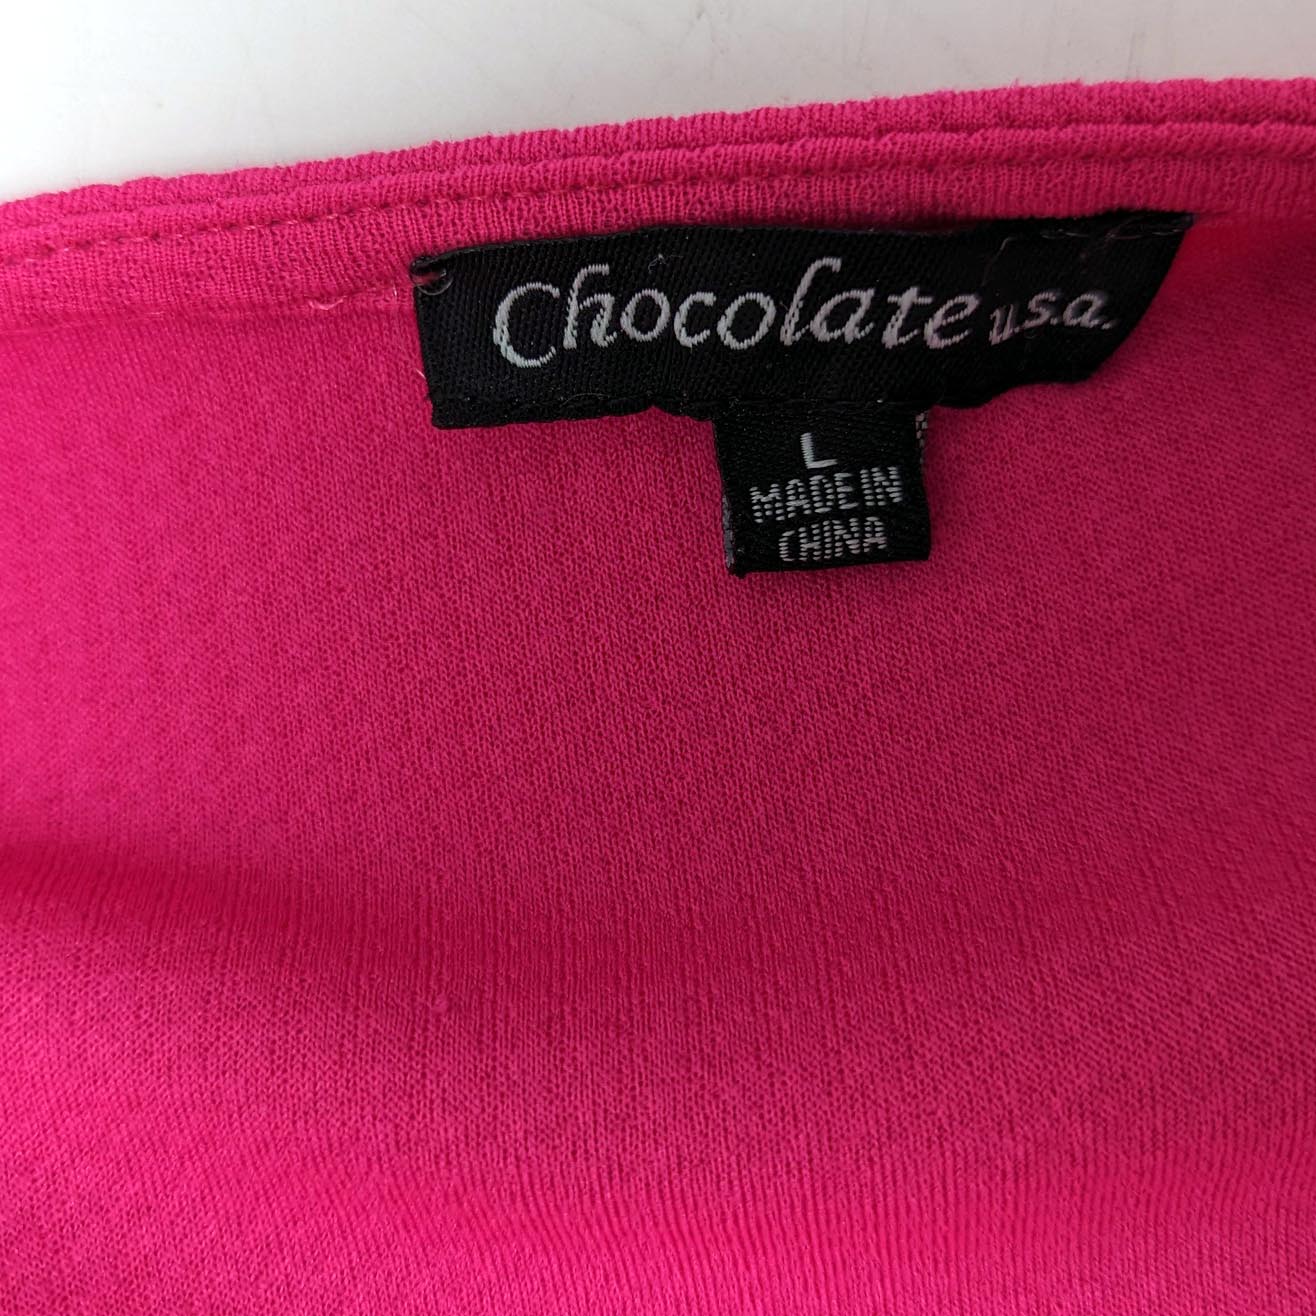 Chocolate USA Womens Sz L Hot Pink w Gold Zippers Half Jacket